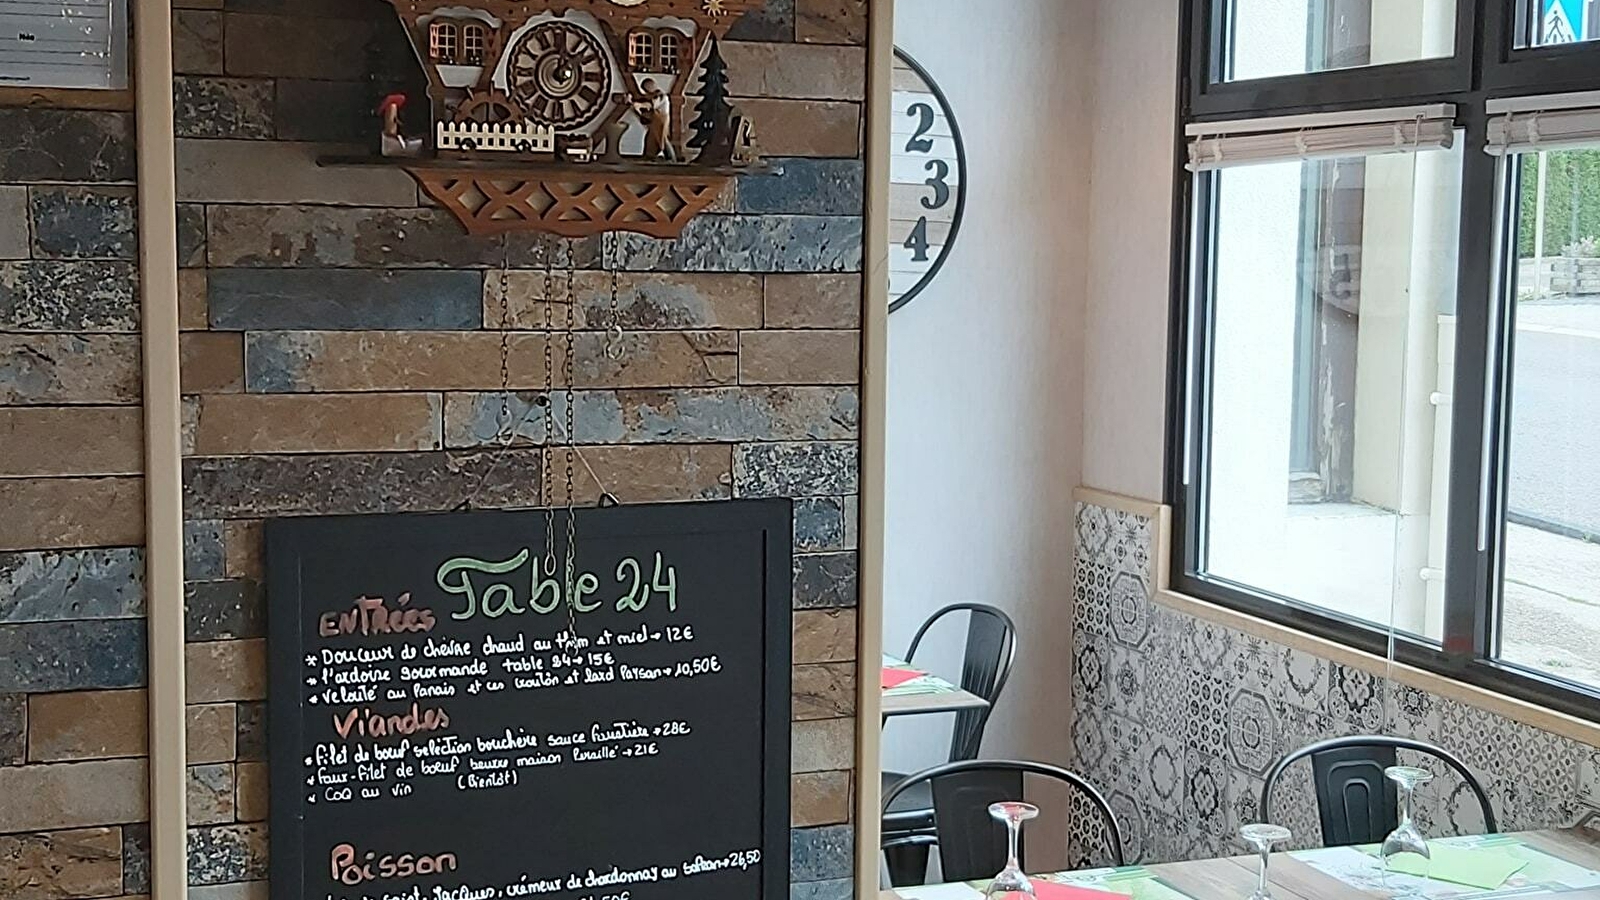 Restaurant Table 24